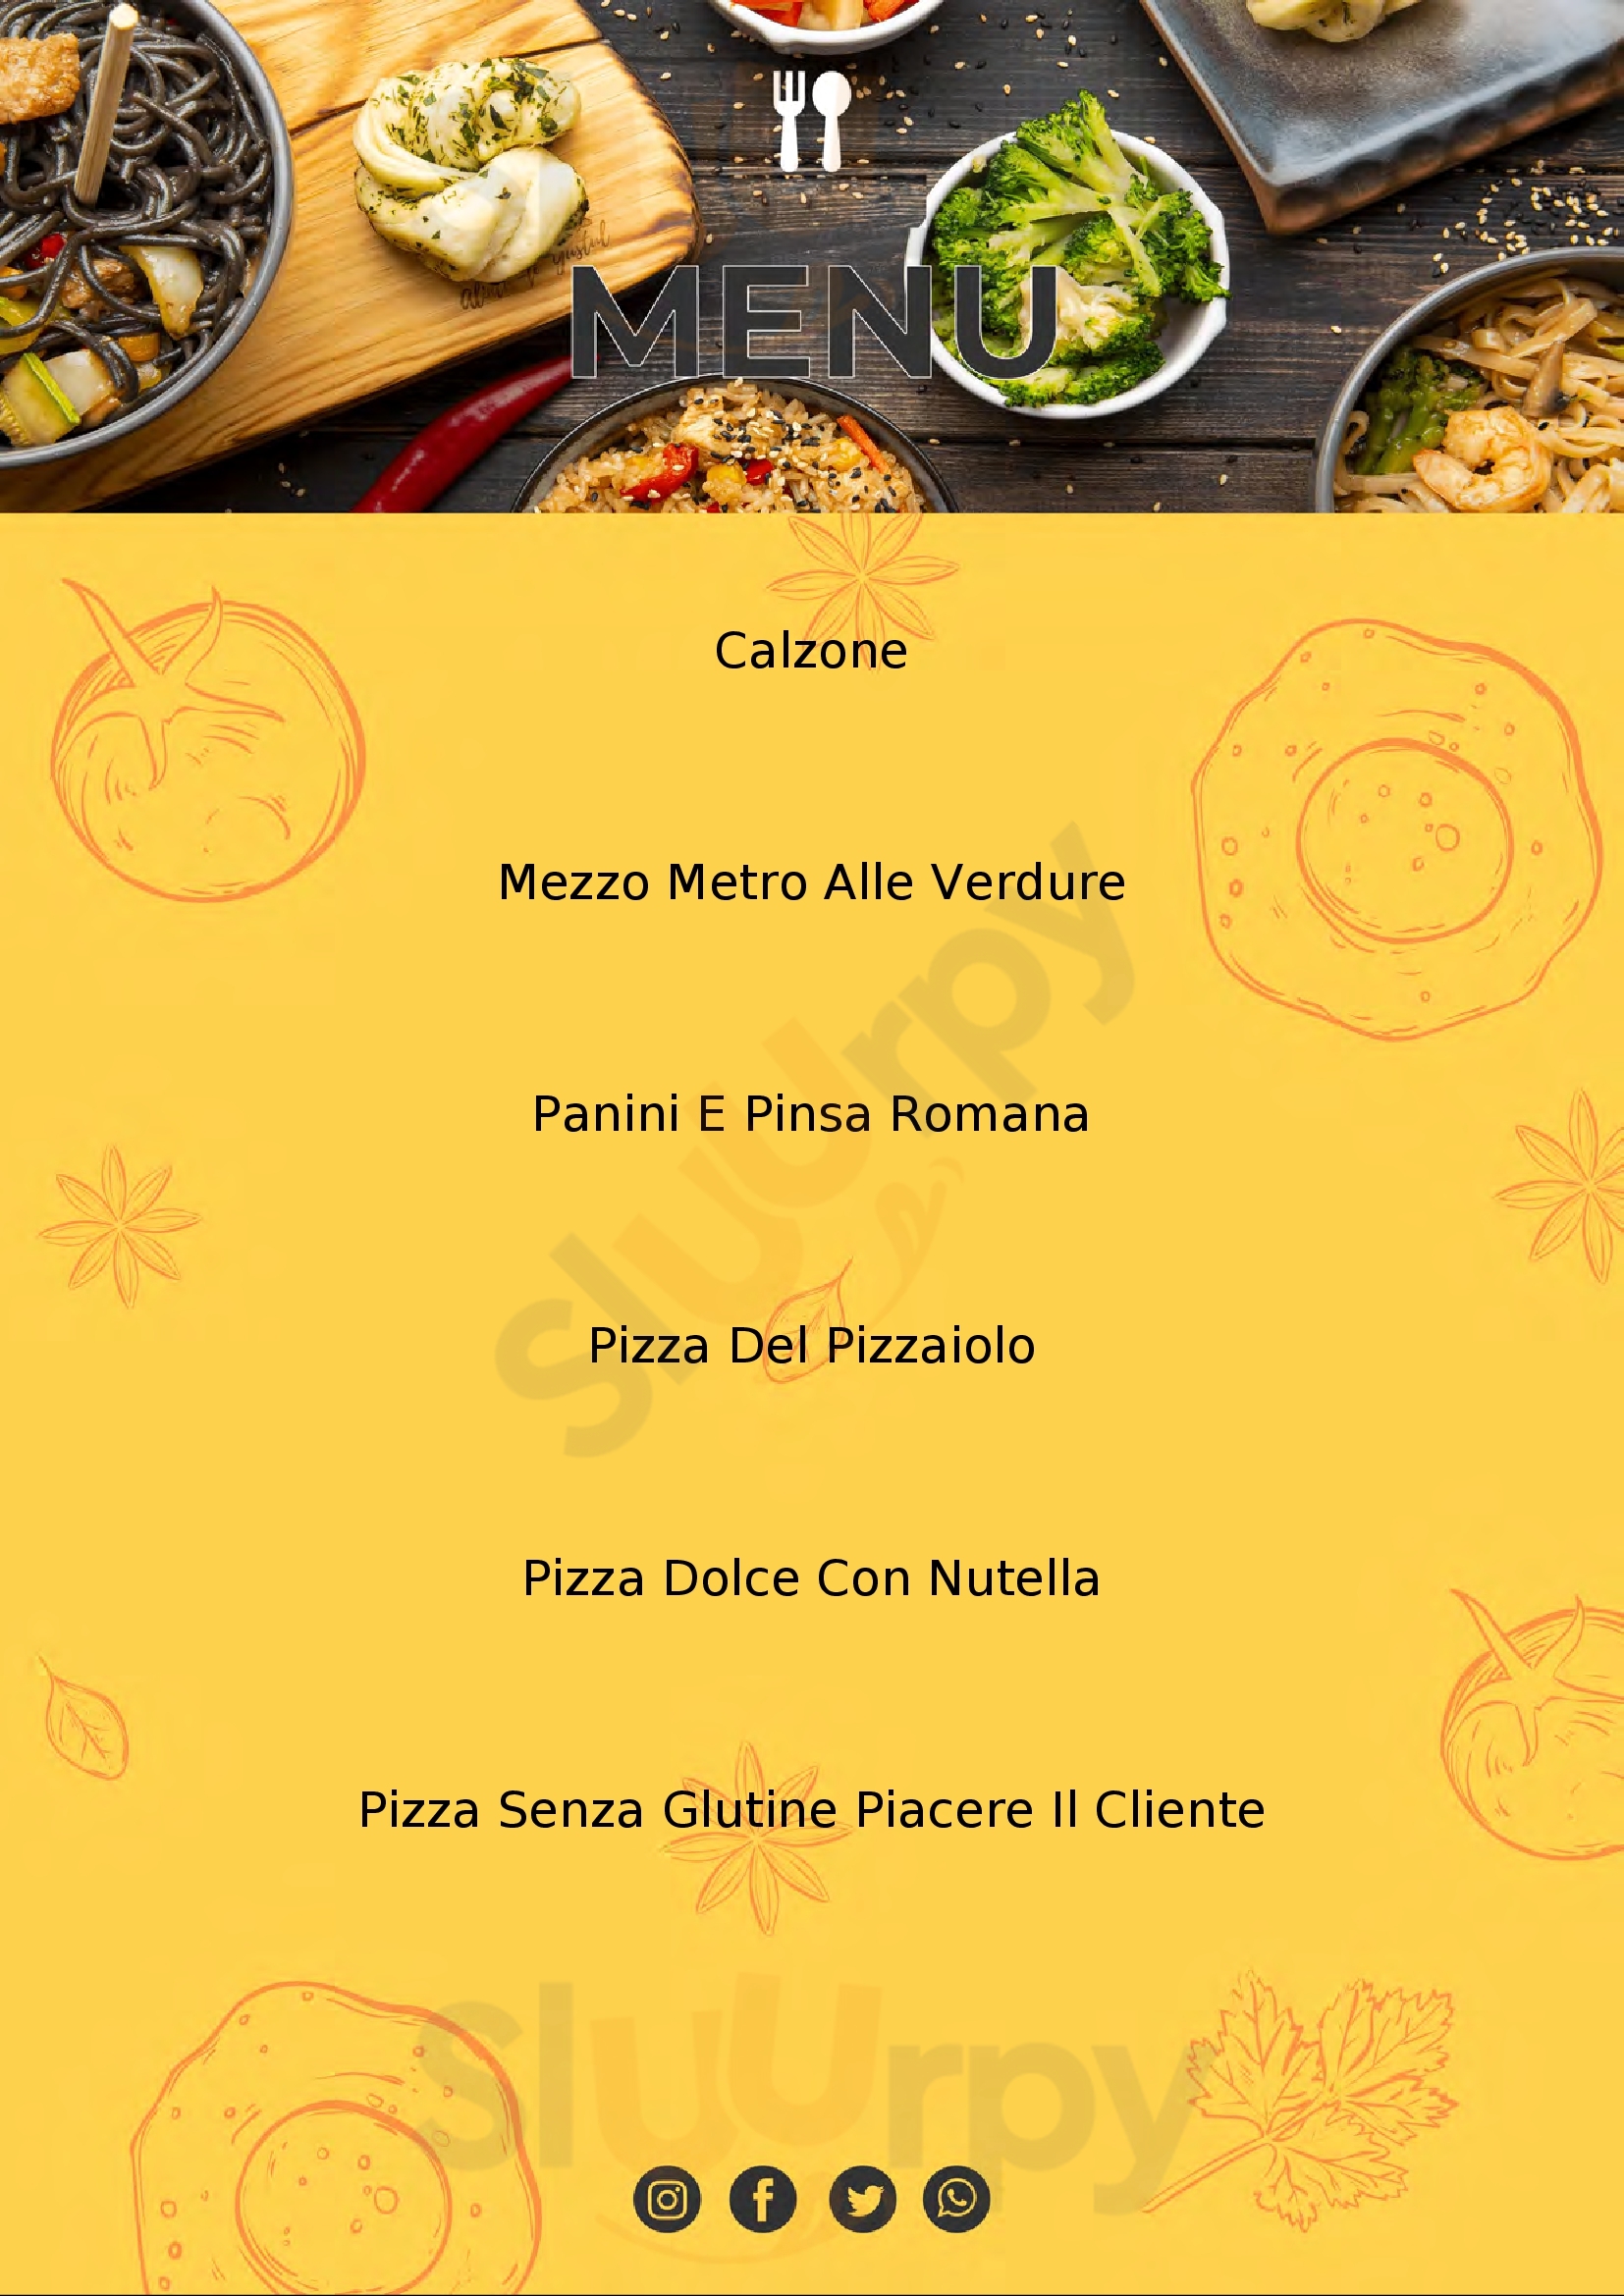 Pizzeria Nuova Leopardi Spilamberto menù 1 pagina